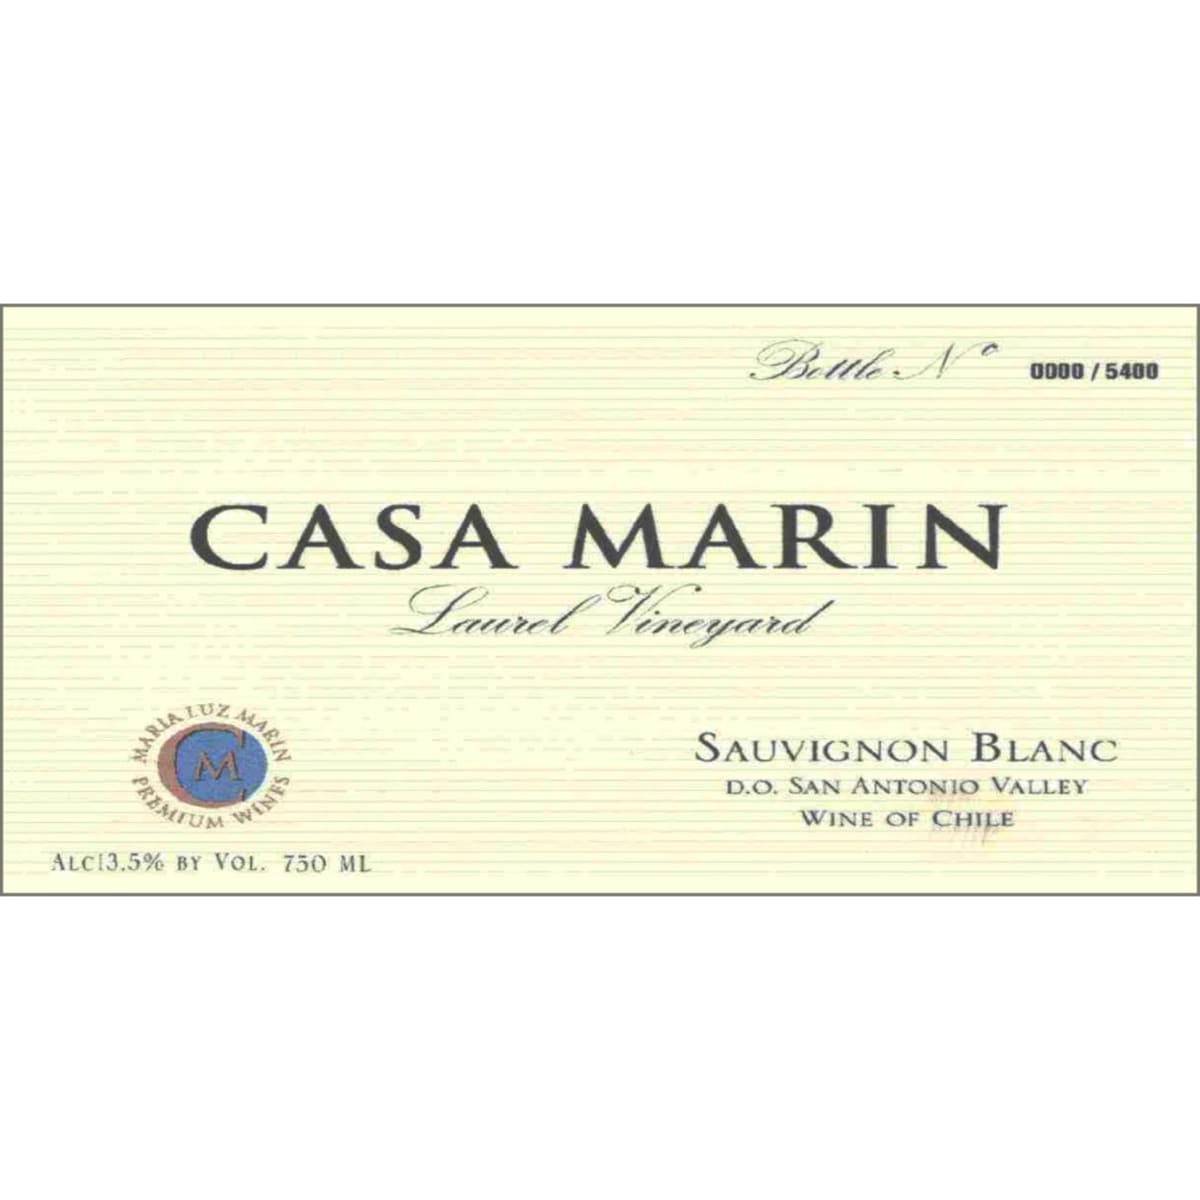 Casa Marin Laurel Vineyard Sauvignon Blanc 2008 Front Label